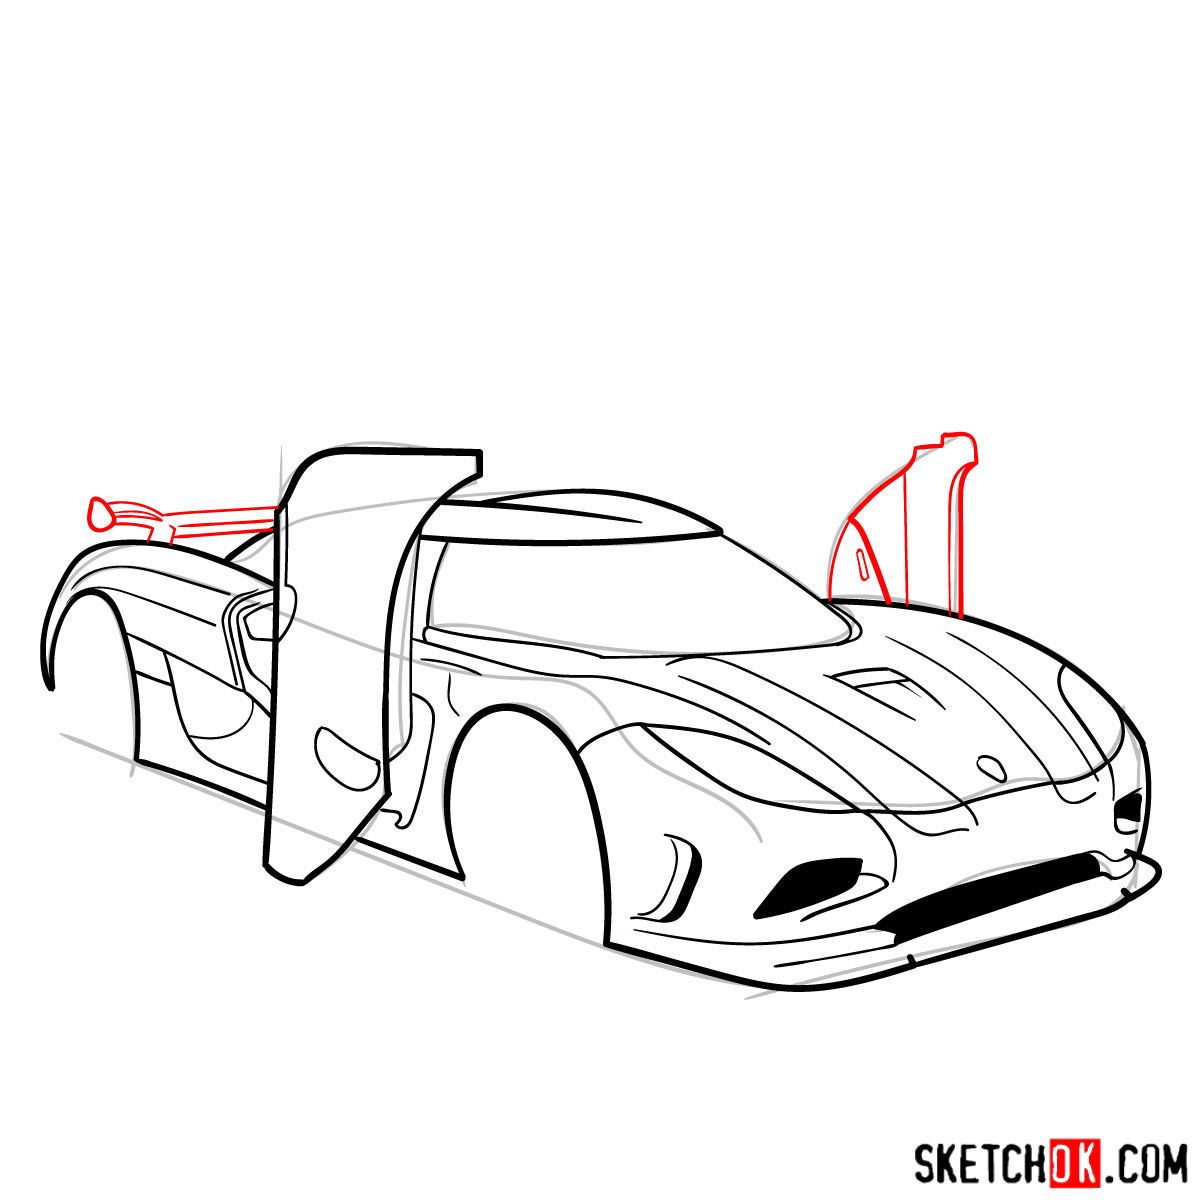 How to draw Koenigsegg Agera R Oman - step 10